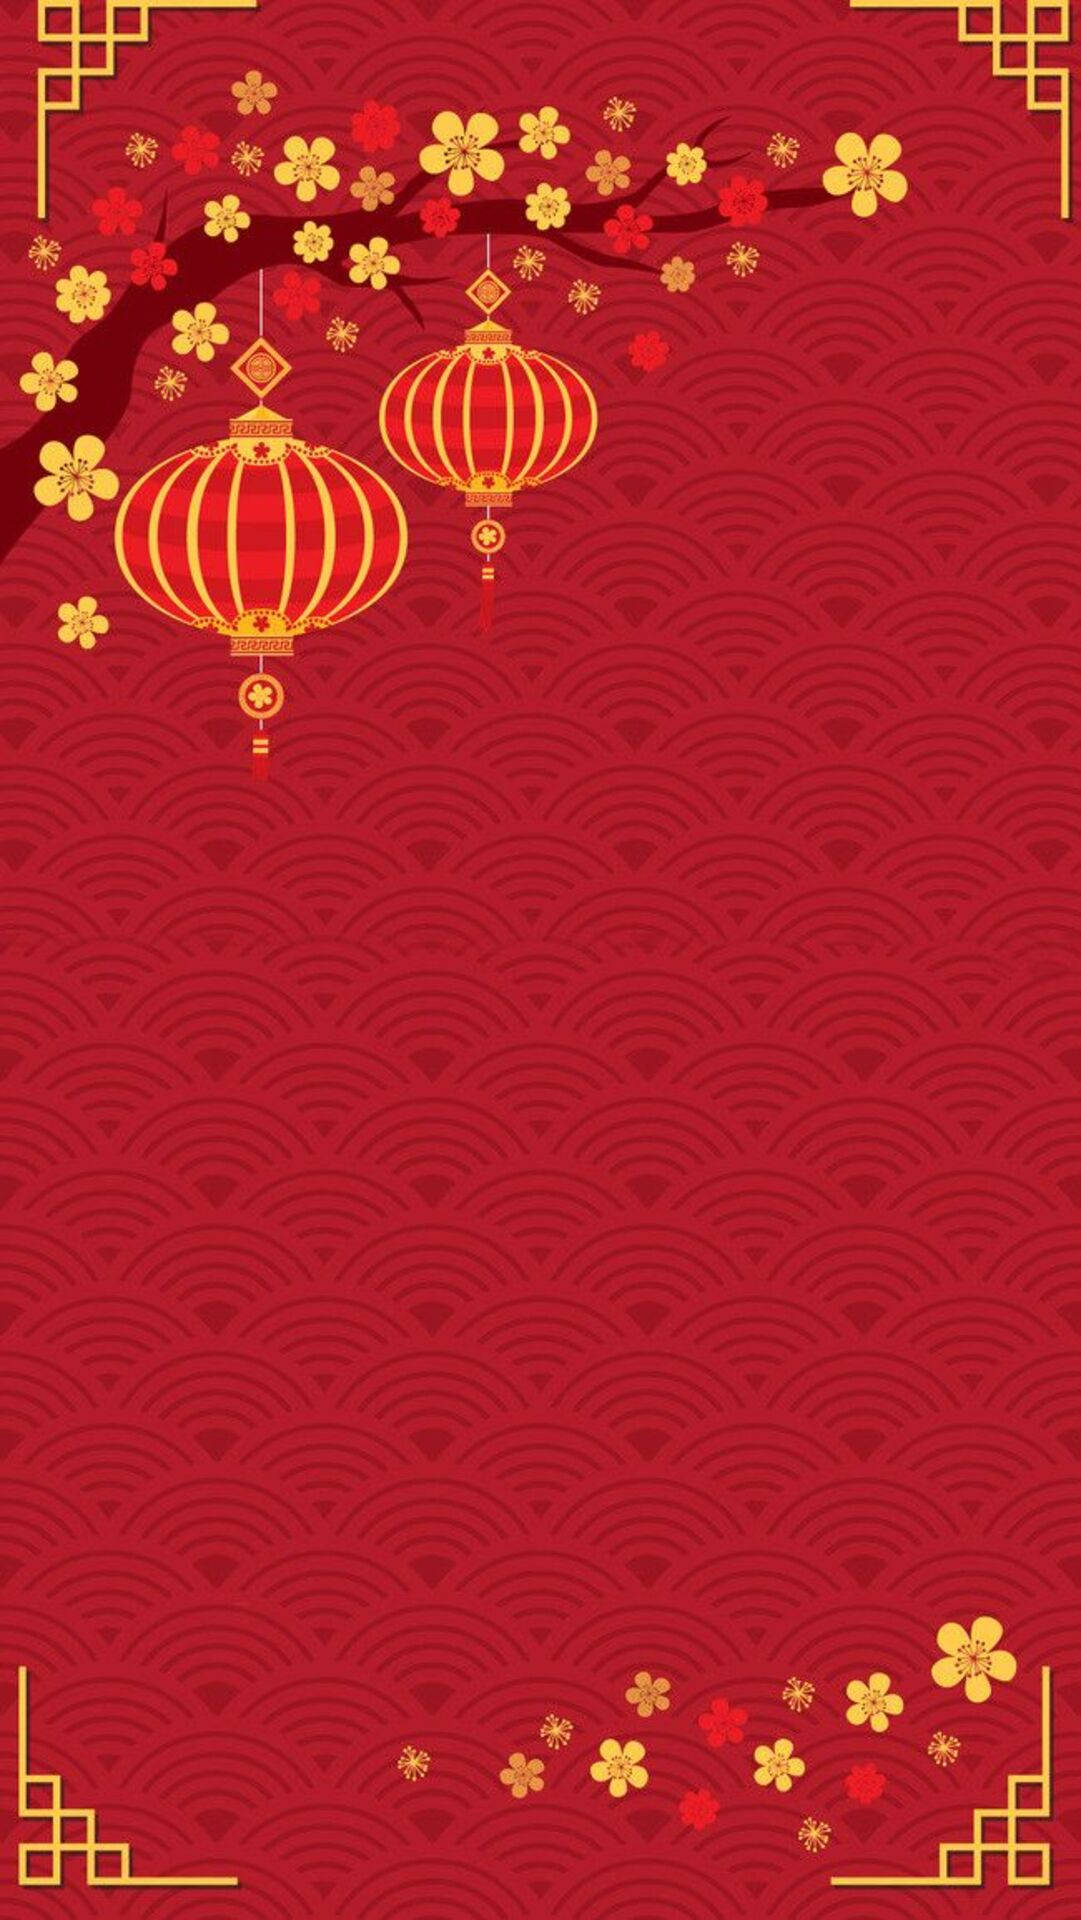 Chinese New Year Lanterns Background